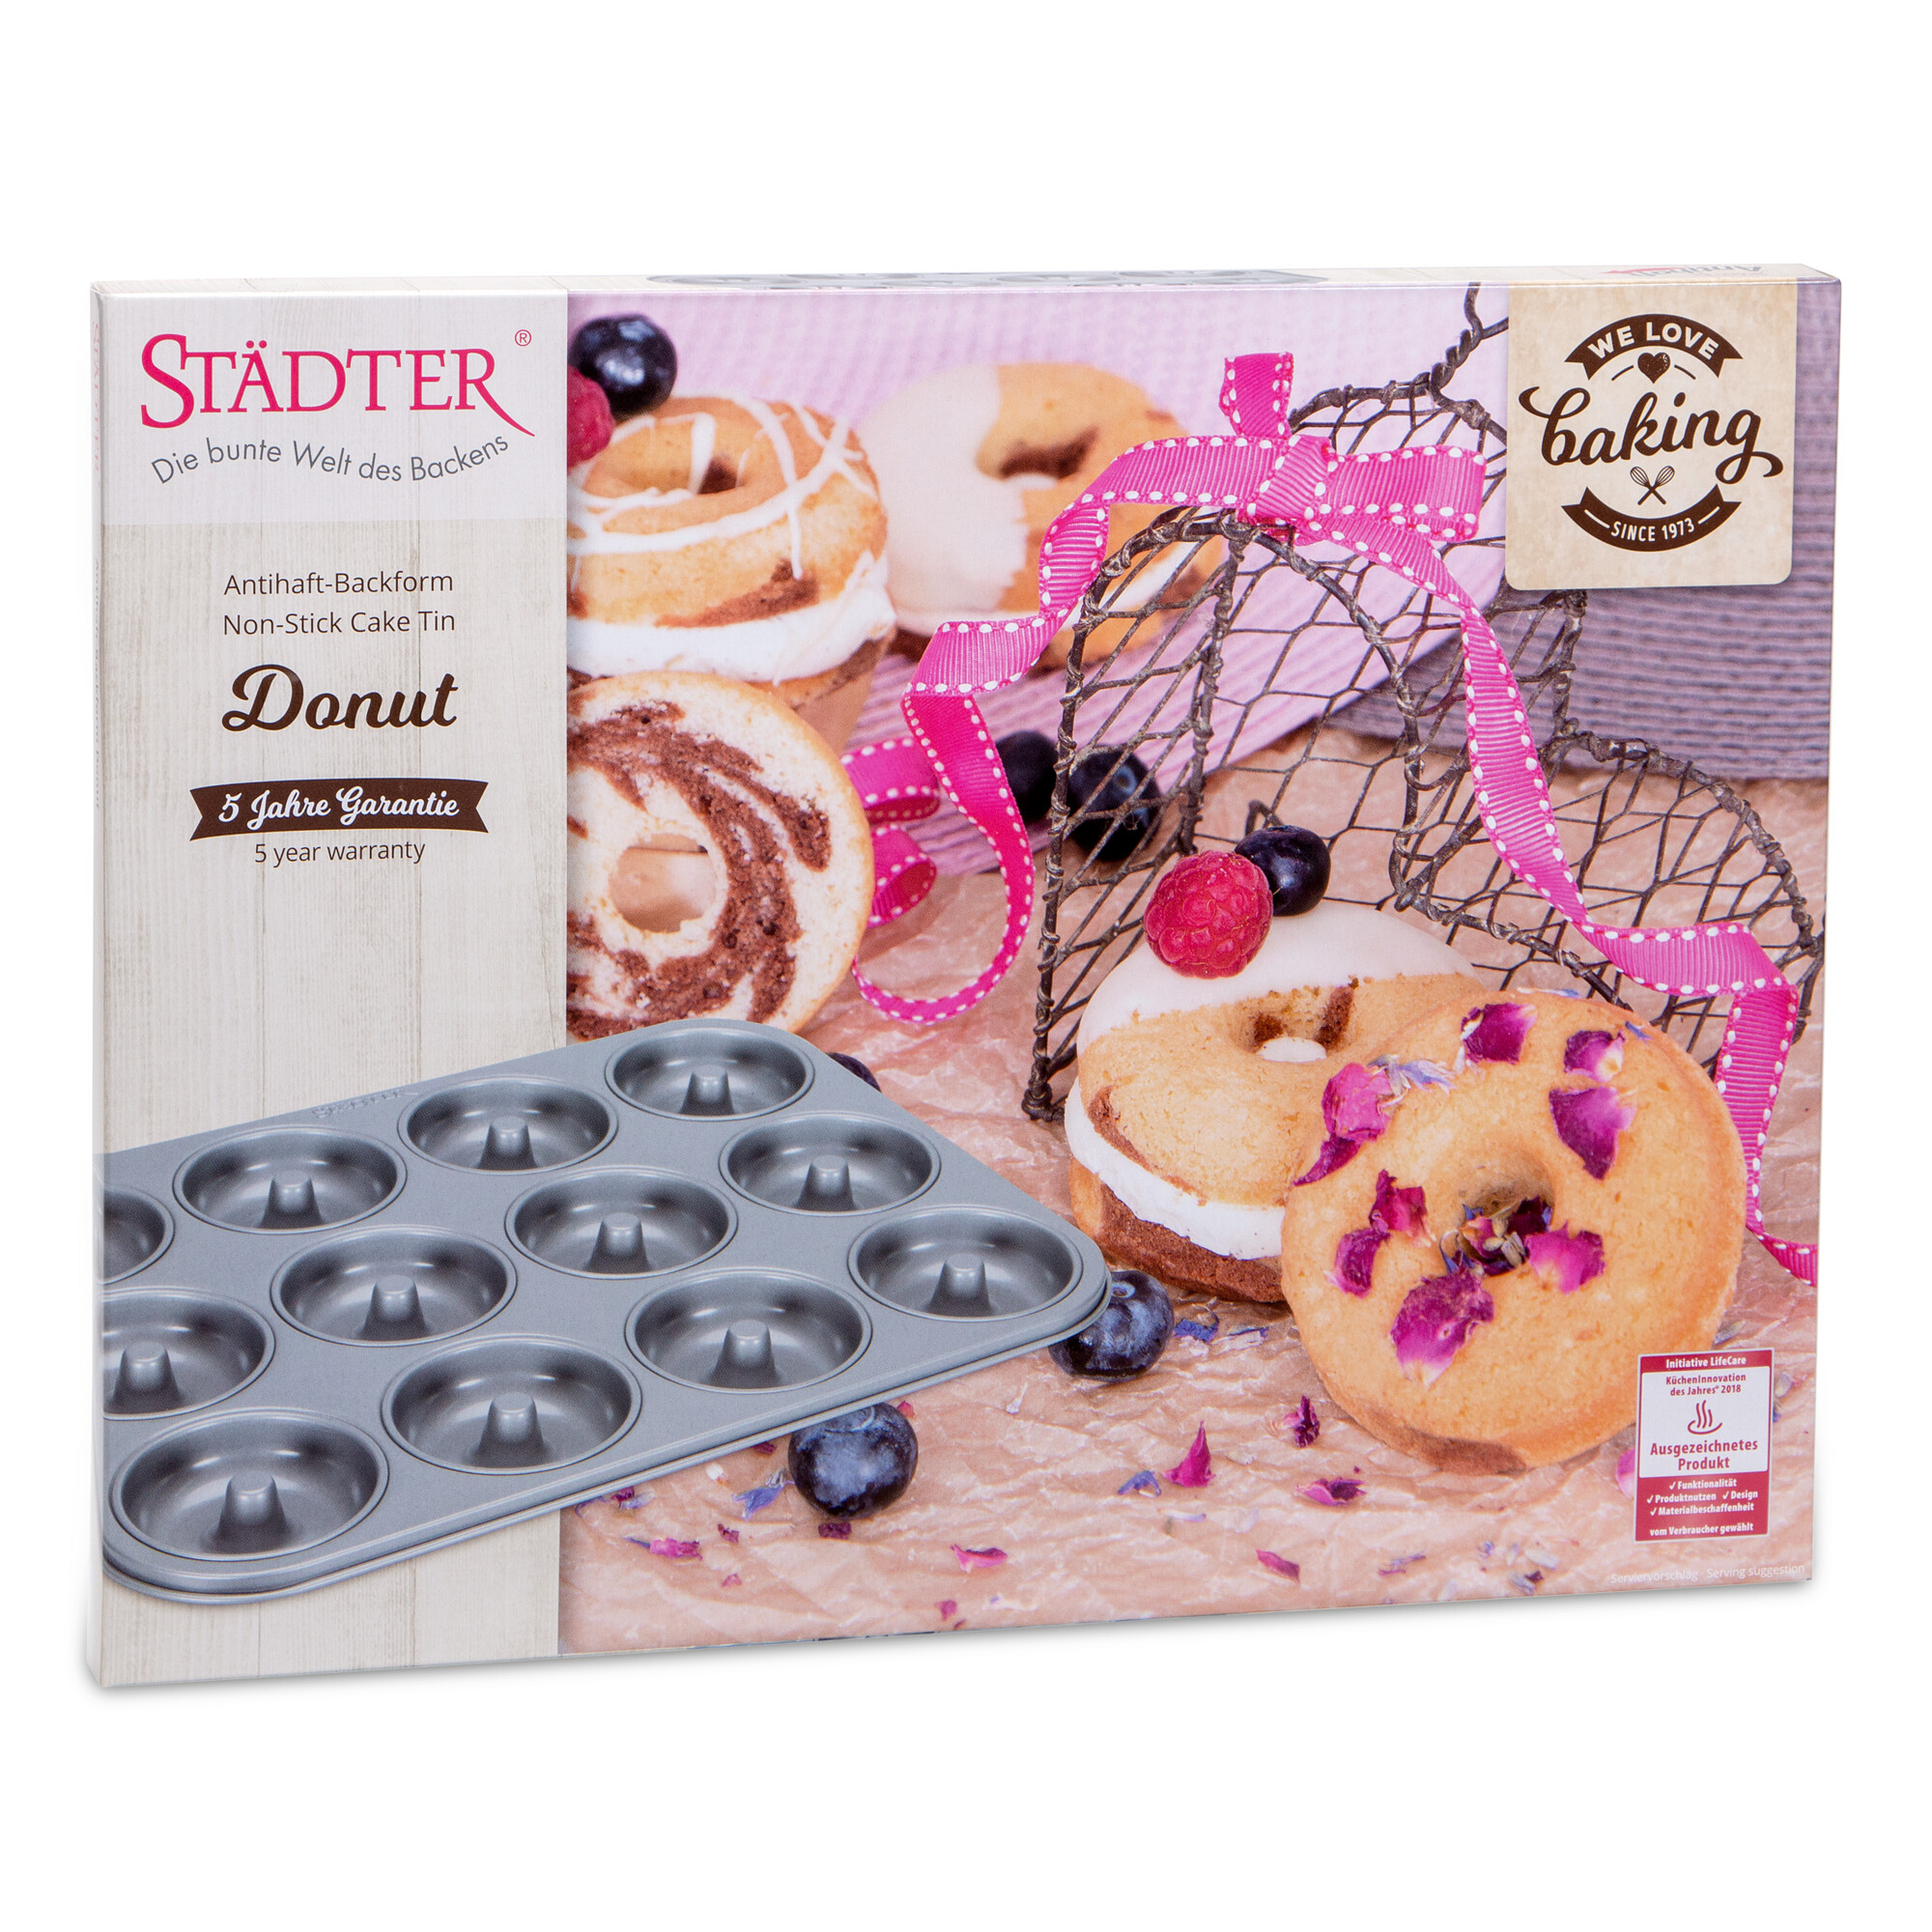 STADTER We love baking - 12 cups MINI BUNDT CAKE PAN